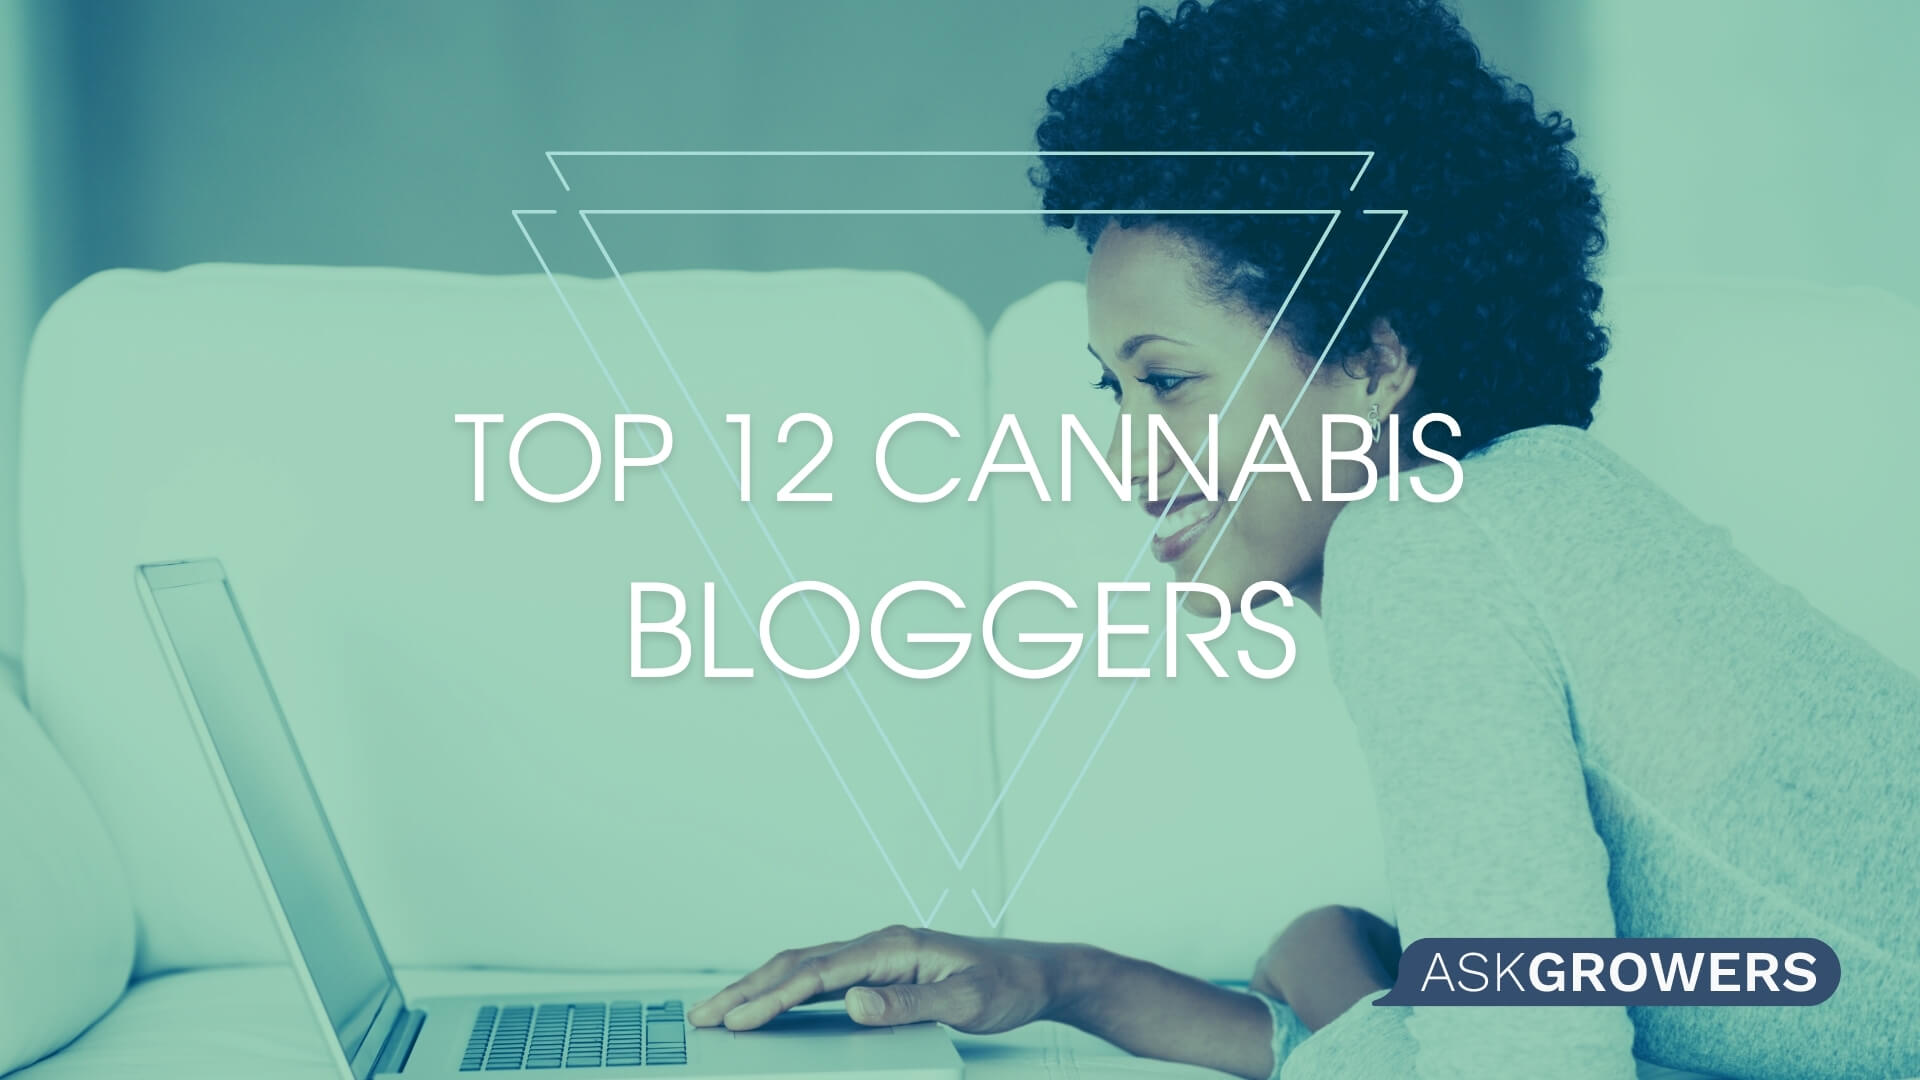 Top 12 Cannabis Bloggers